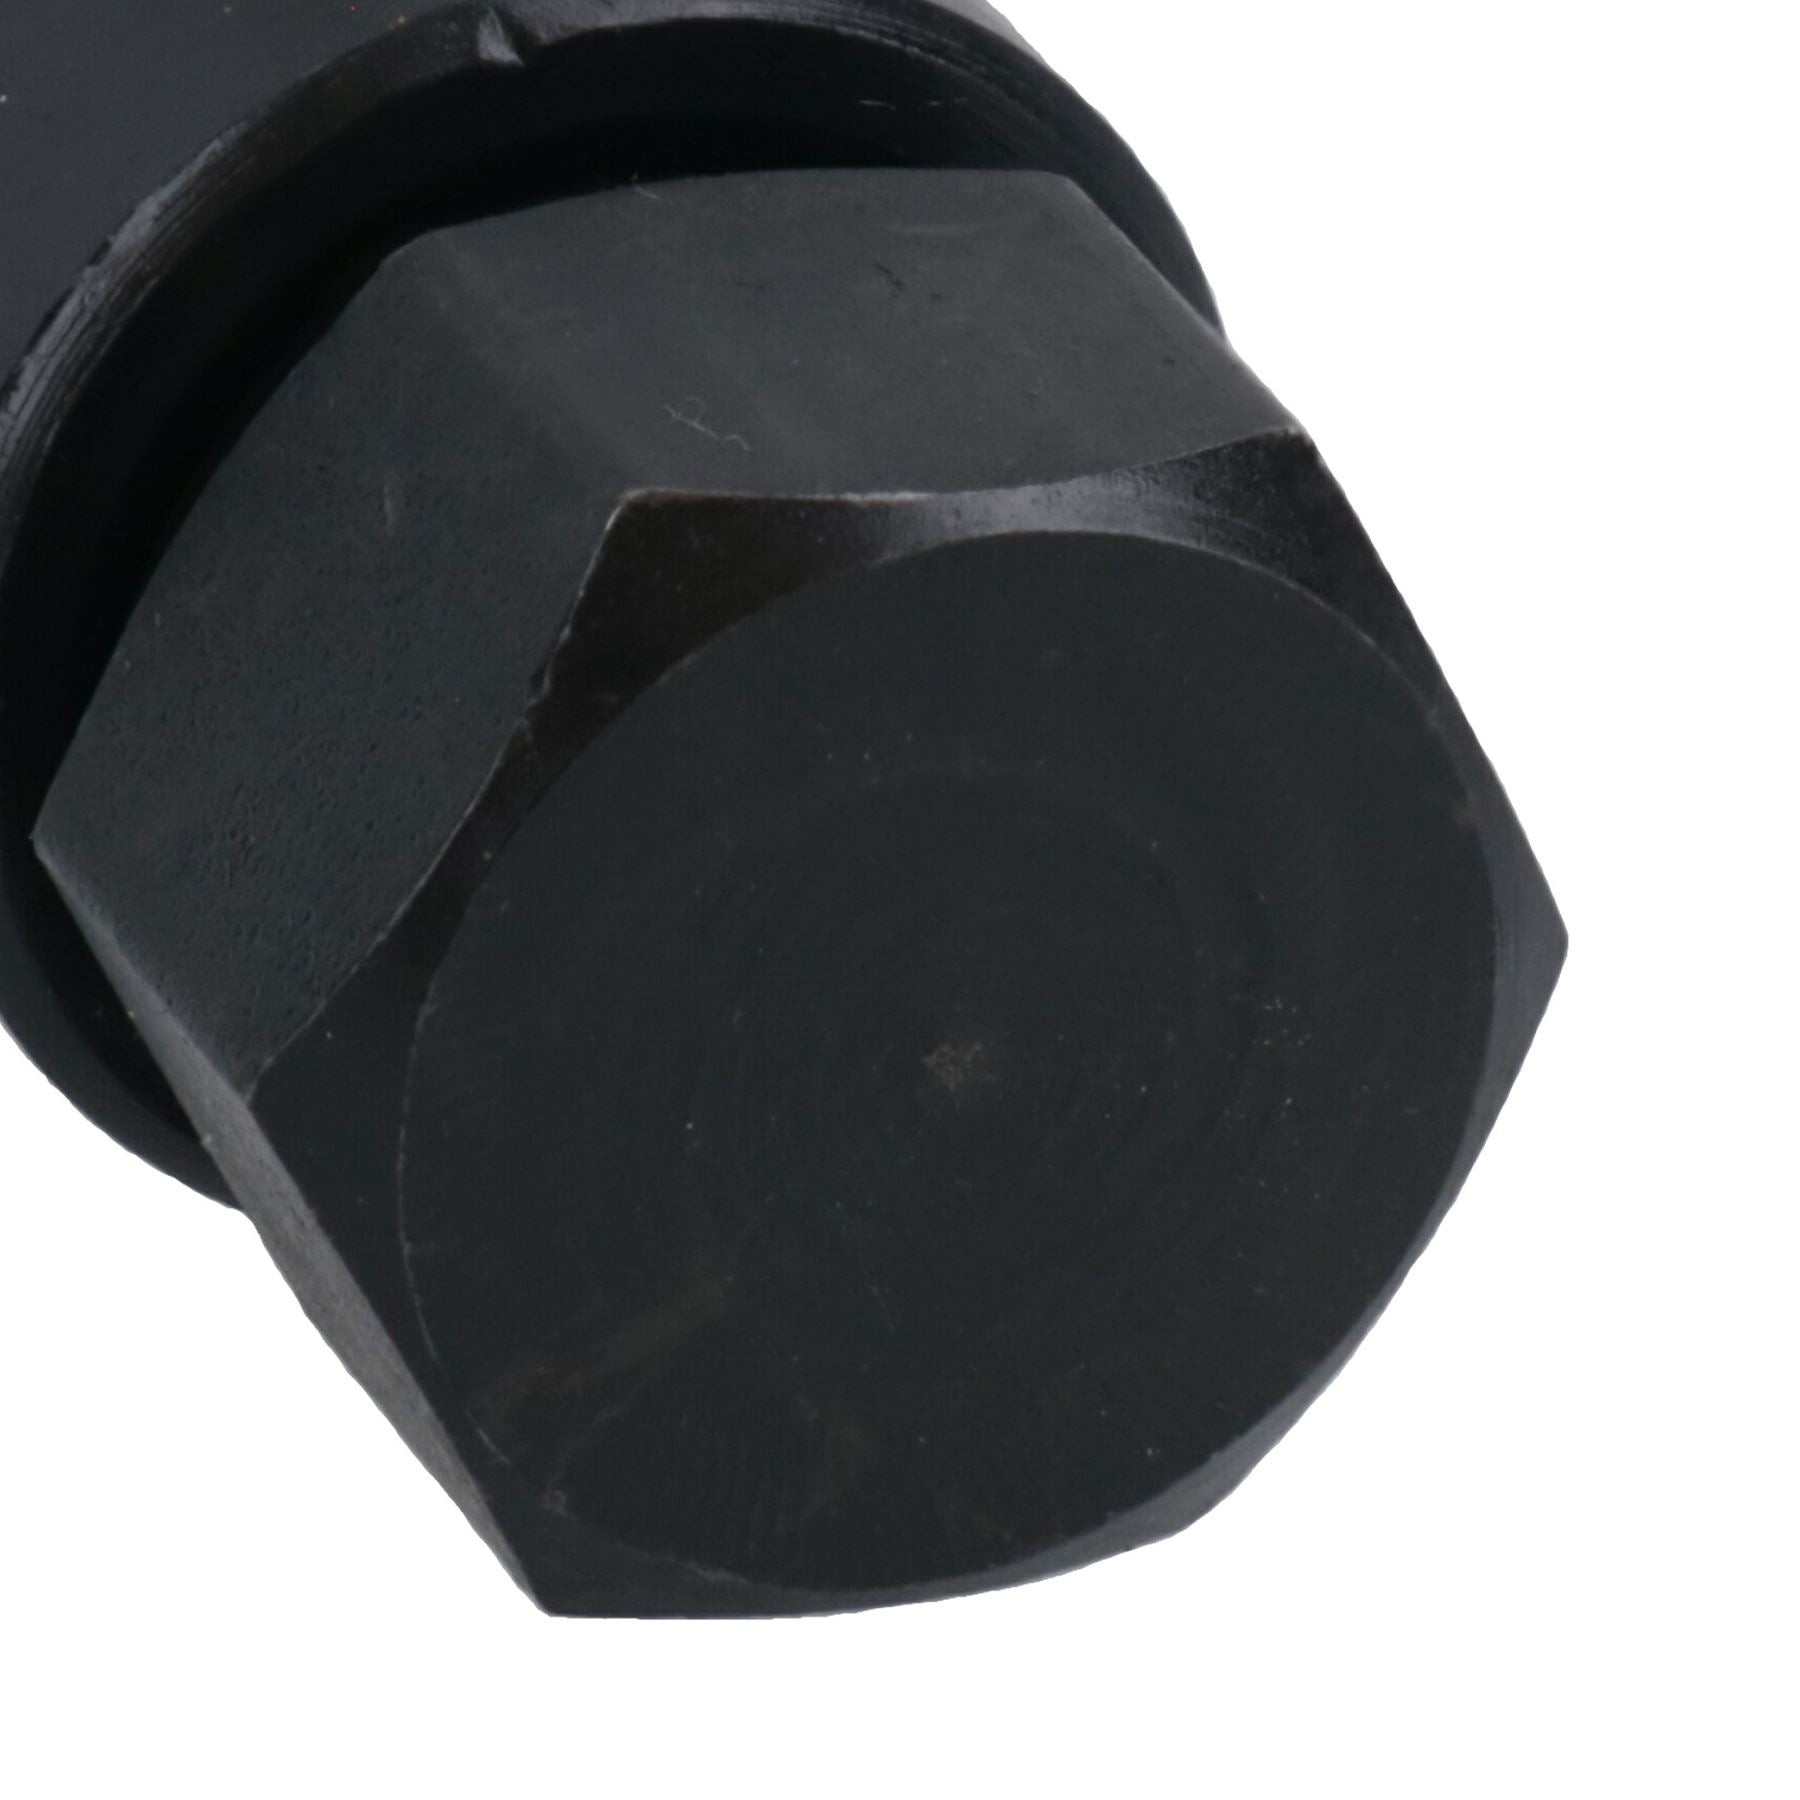 Metric Impact Allen Hex Key Shallow Sockets 2mm – 22mm 17pc Mixed Drive